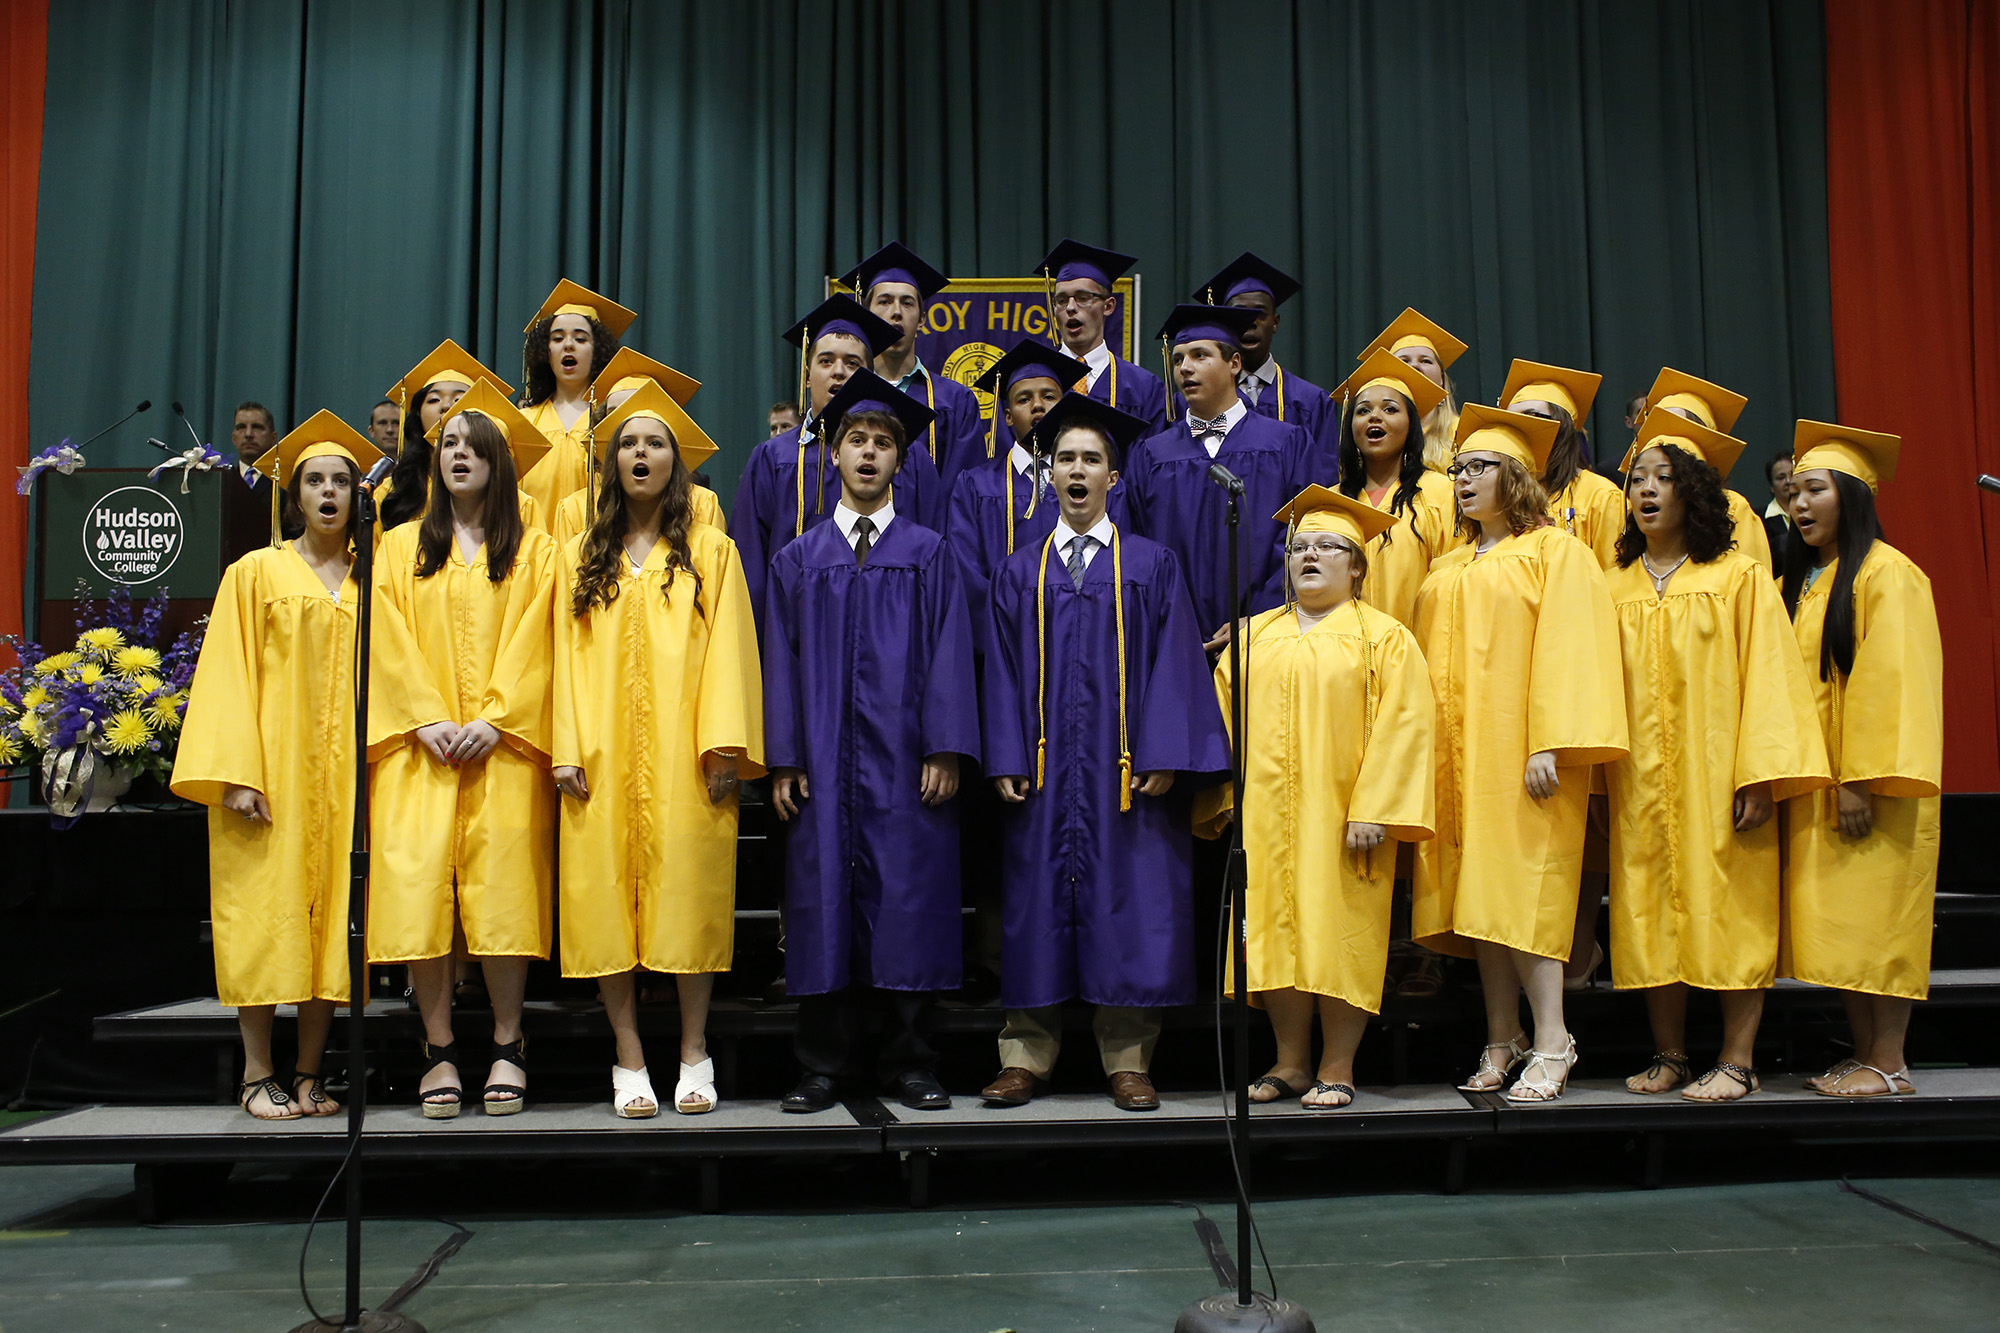 Troy High School graduation photos